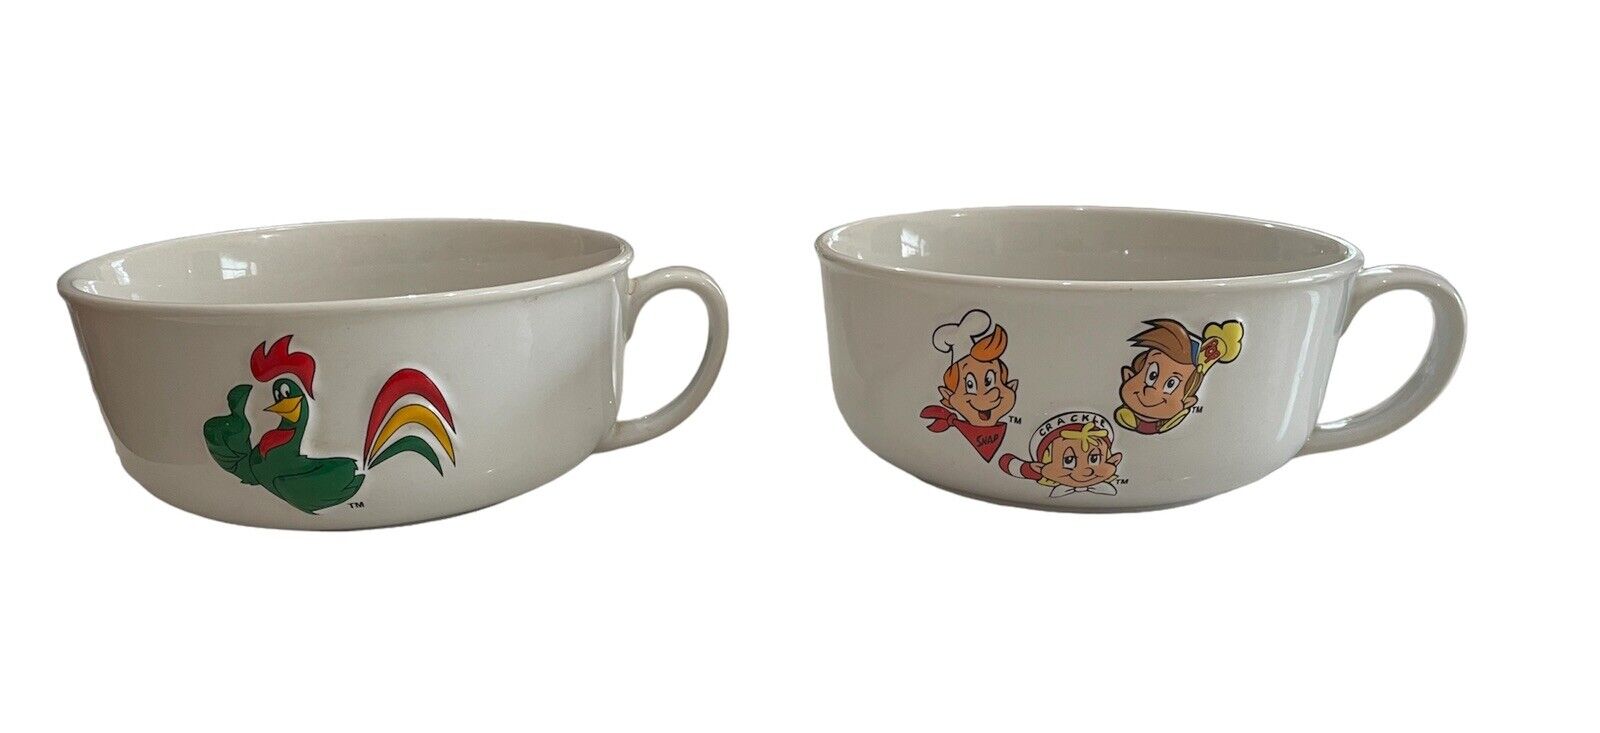 1999 Vintage Kellogg's Snap Crackle Pop And Cornflake 6 Inch Heavy Ceramic Bowls